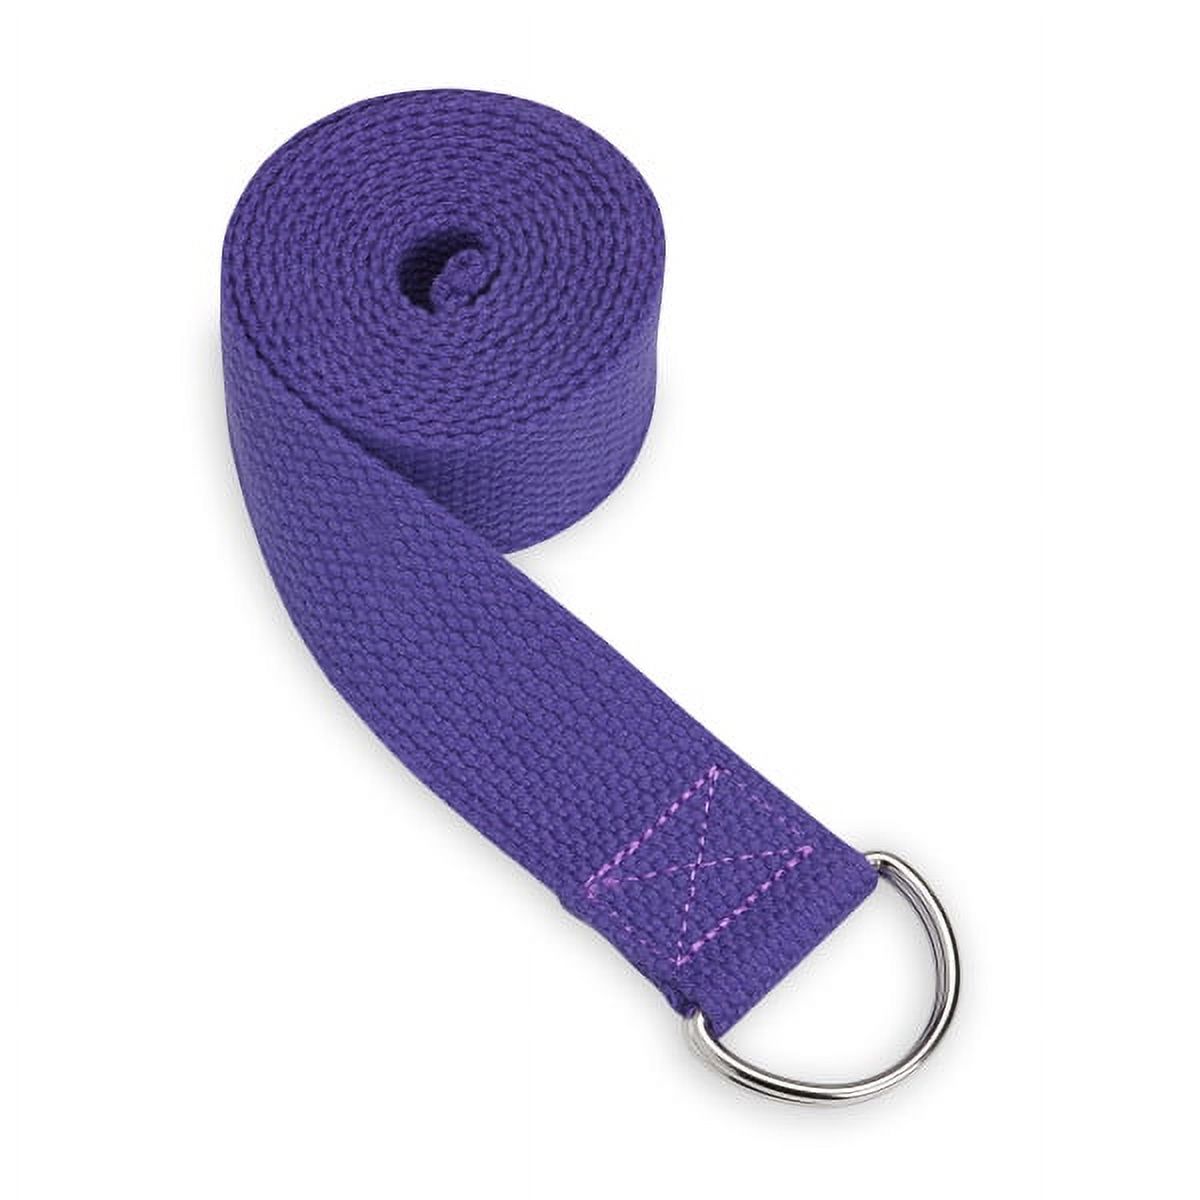 Gaiam Yoga Strap, 6 Ft, Purple - image 1 of 5